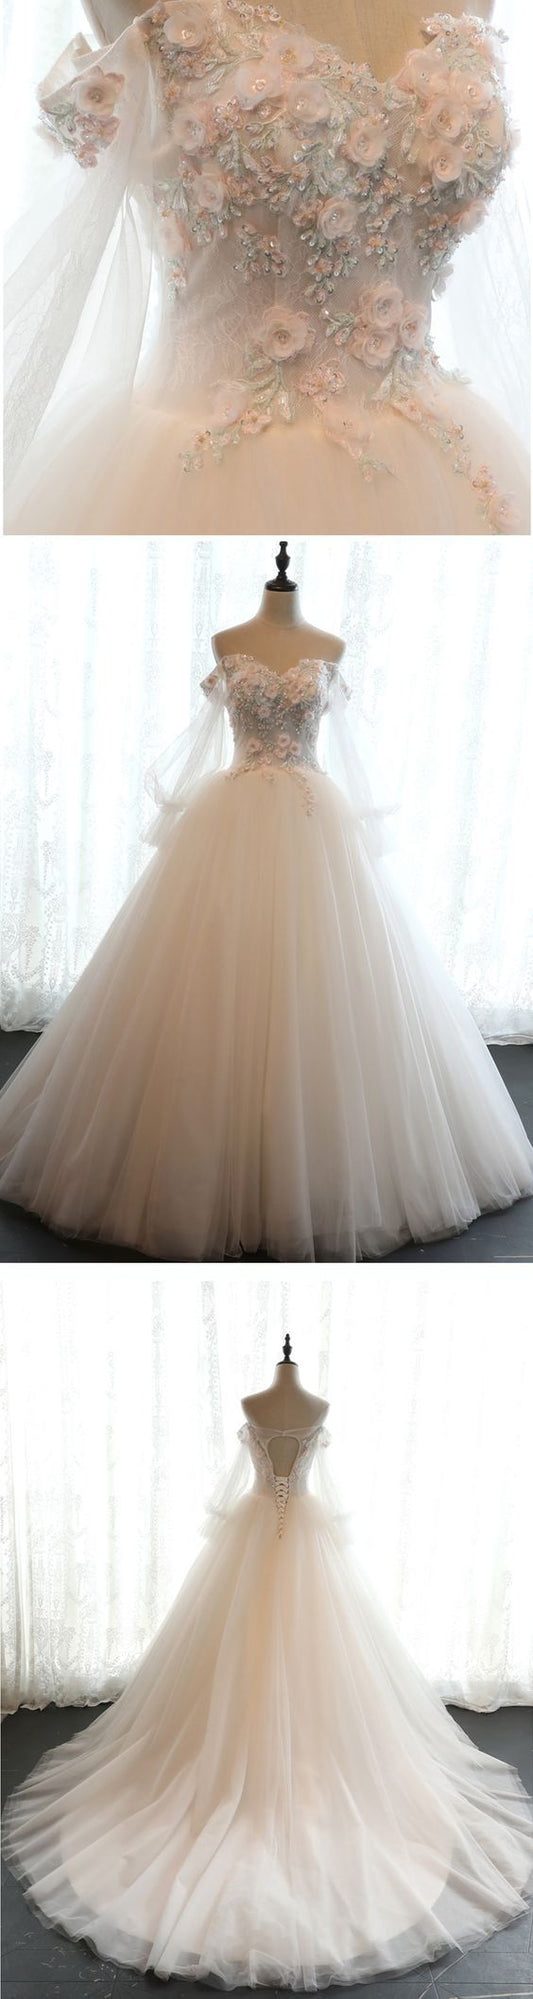 beautiful prom dresses Wedding Dresses,Bridal Dress,Brides Dress,Vintage Wedding Gowns,Wedding Gown   cg16153